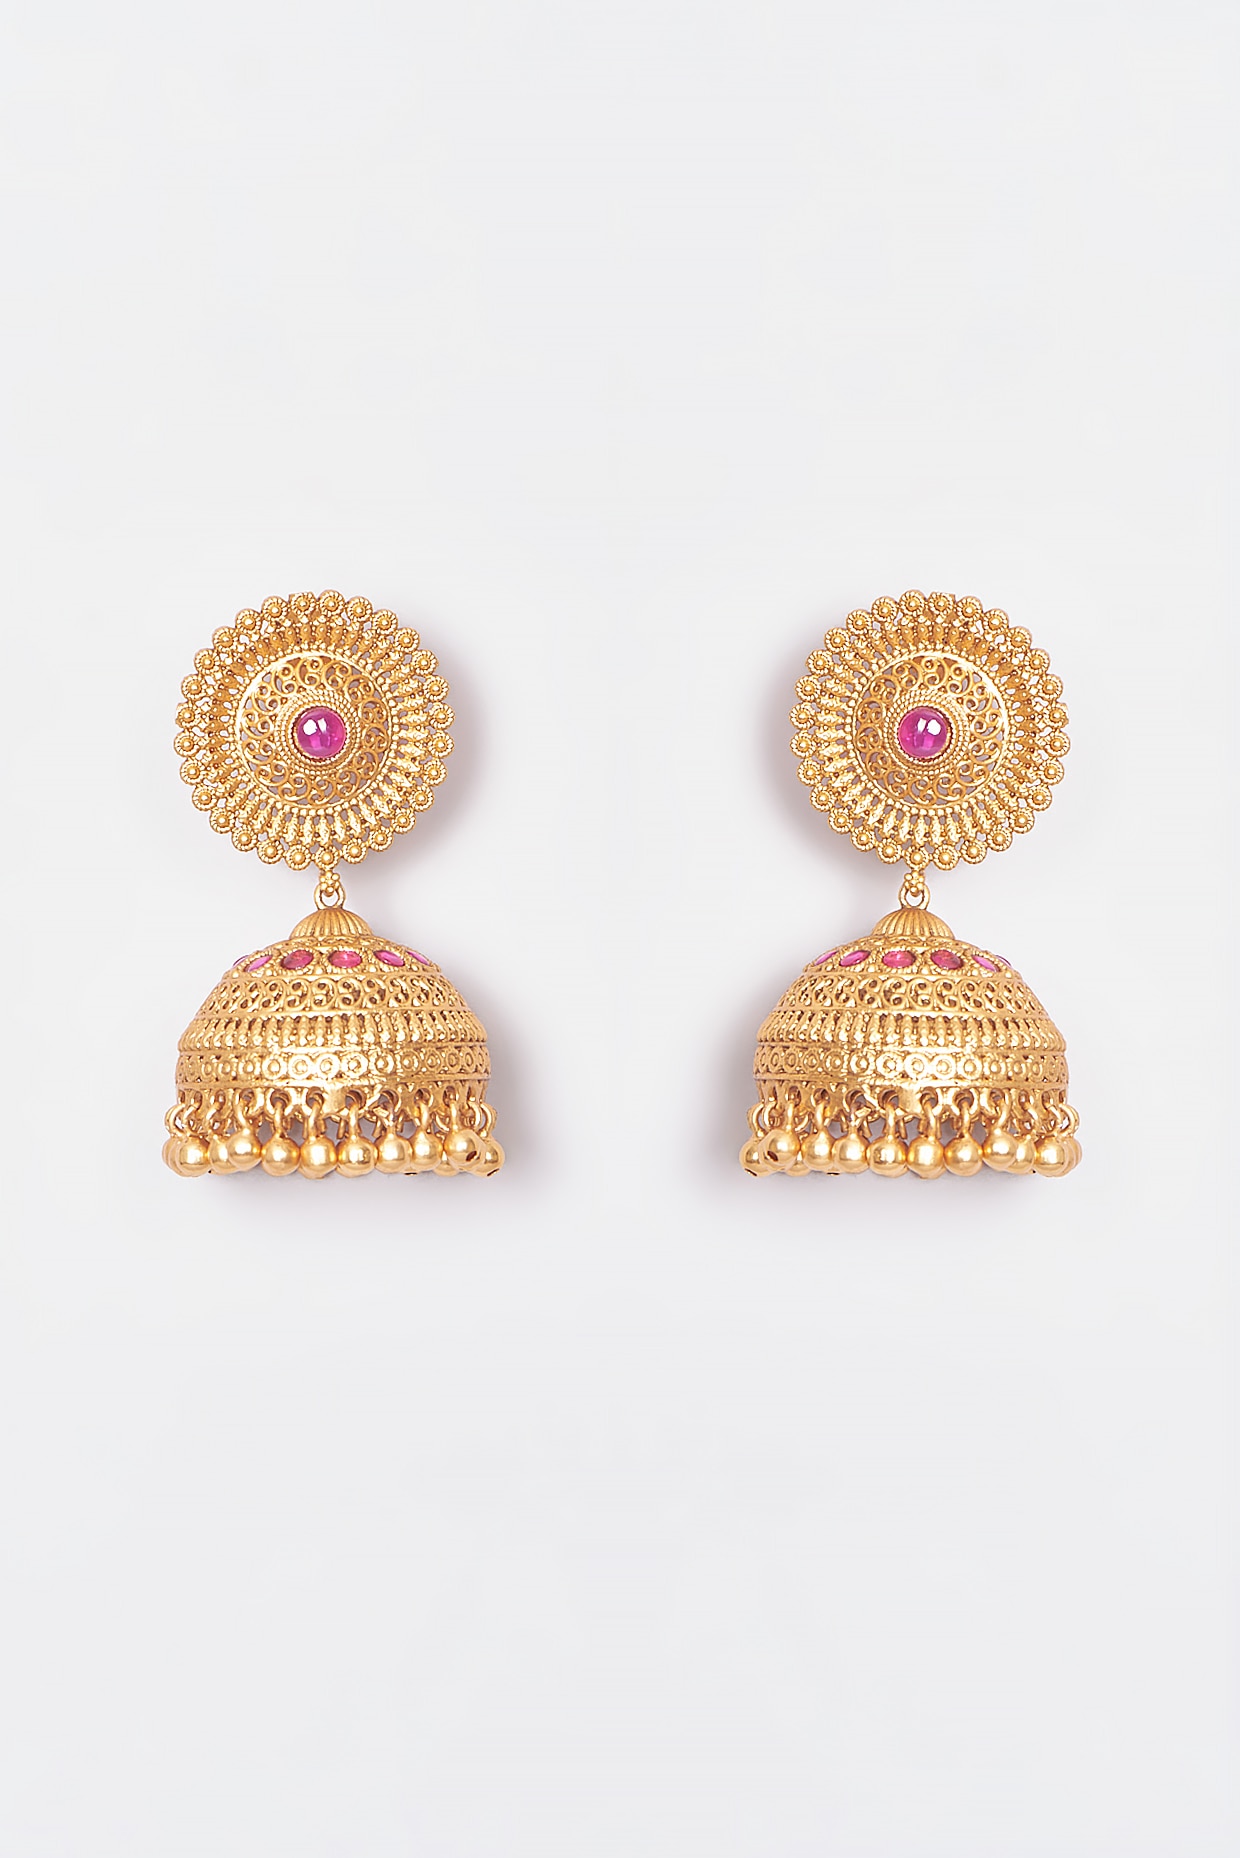 Anjali Jewellers in Worli,Mumbai - Best Silver Jewellery Showrooms in  Mumbai - Justdial